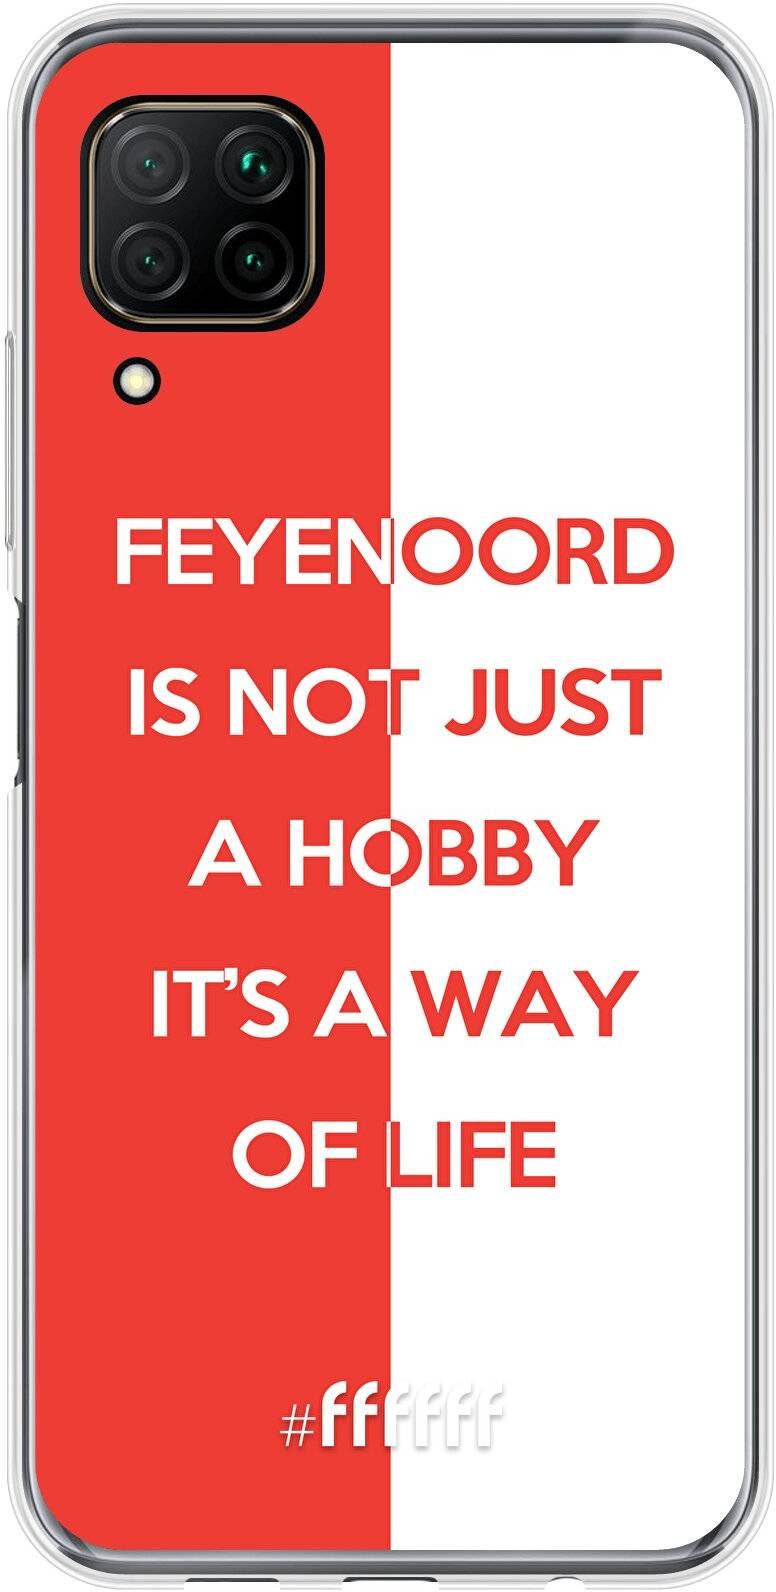 Feyenoord - Way of life P40 Lite